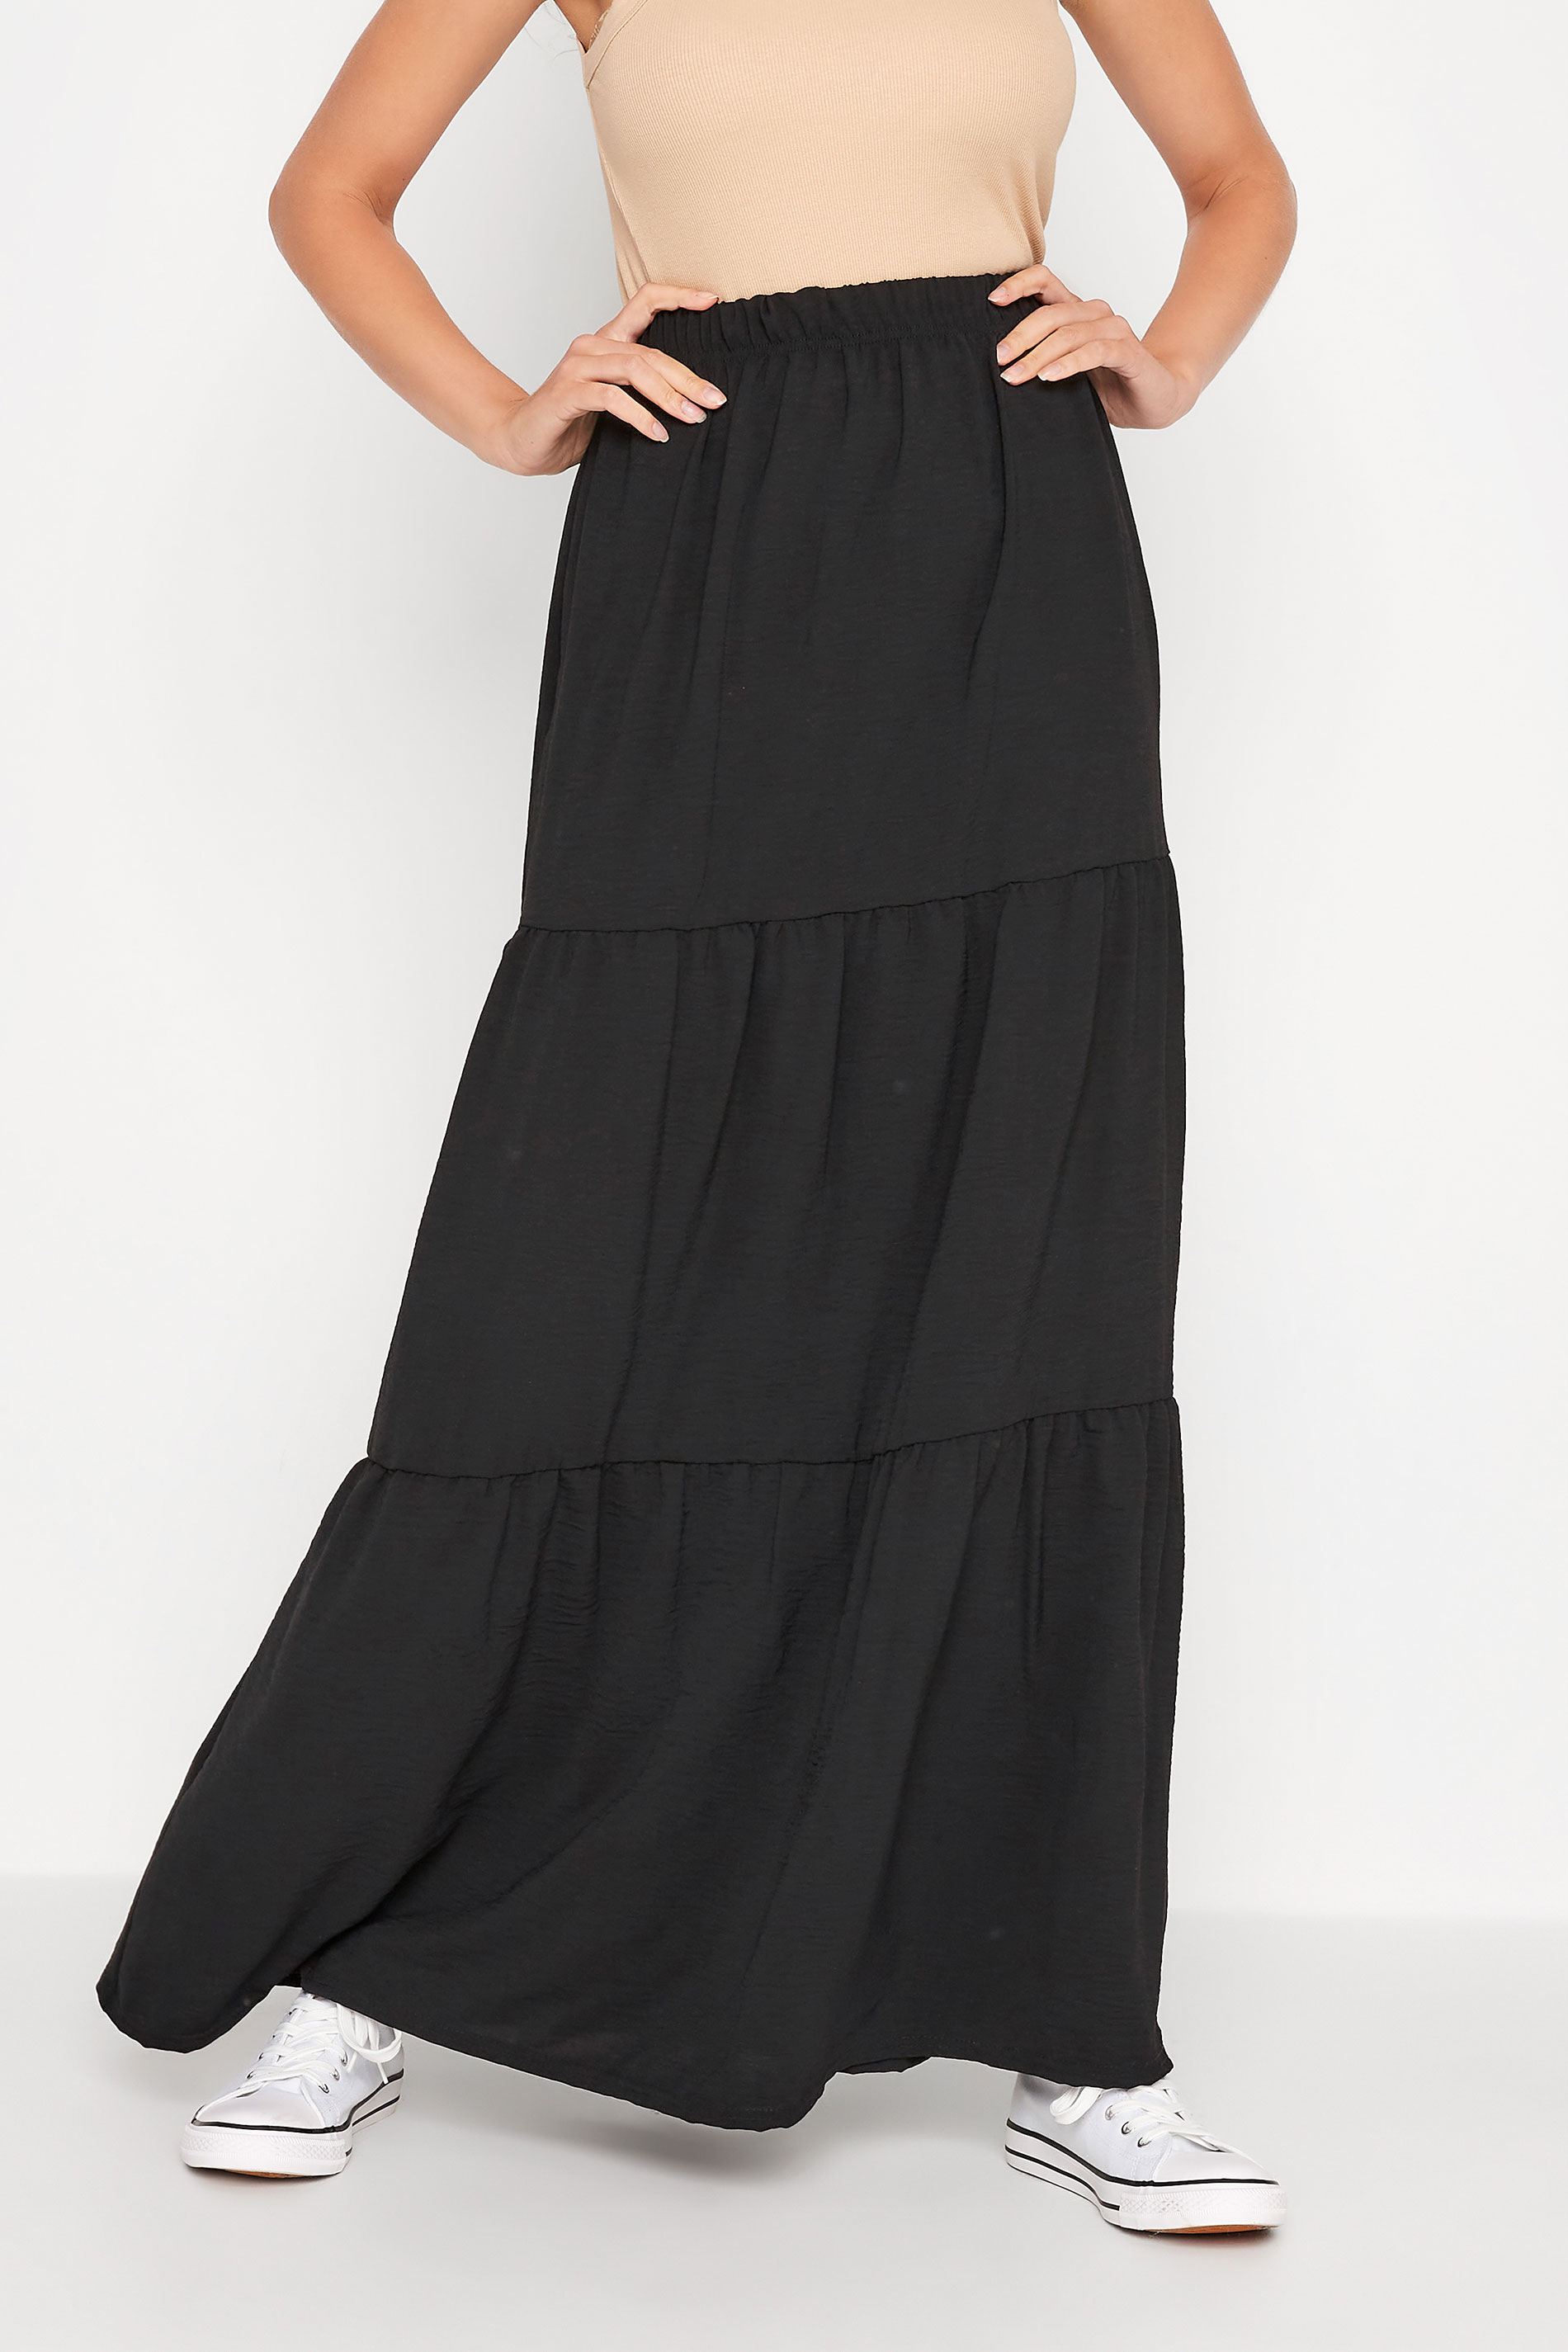 LTS Tall Women's Black Tiered Crepe Maxi Skirt | Long Tall Sally 1